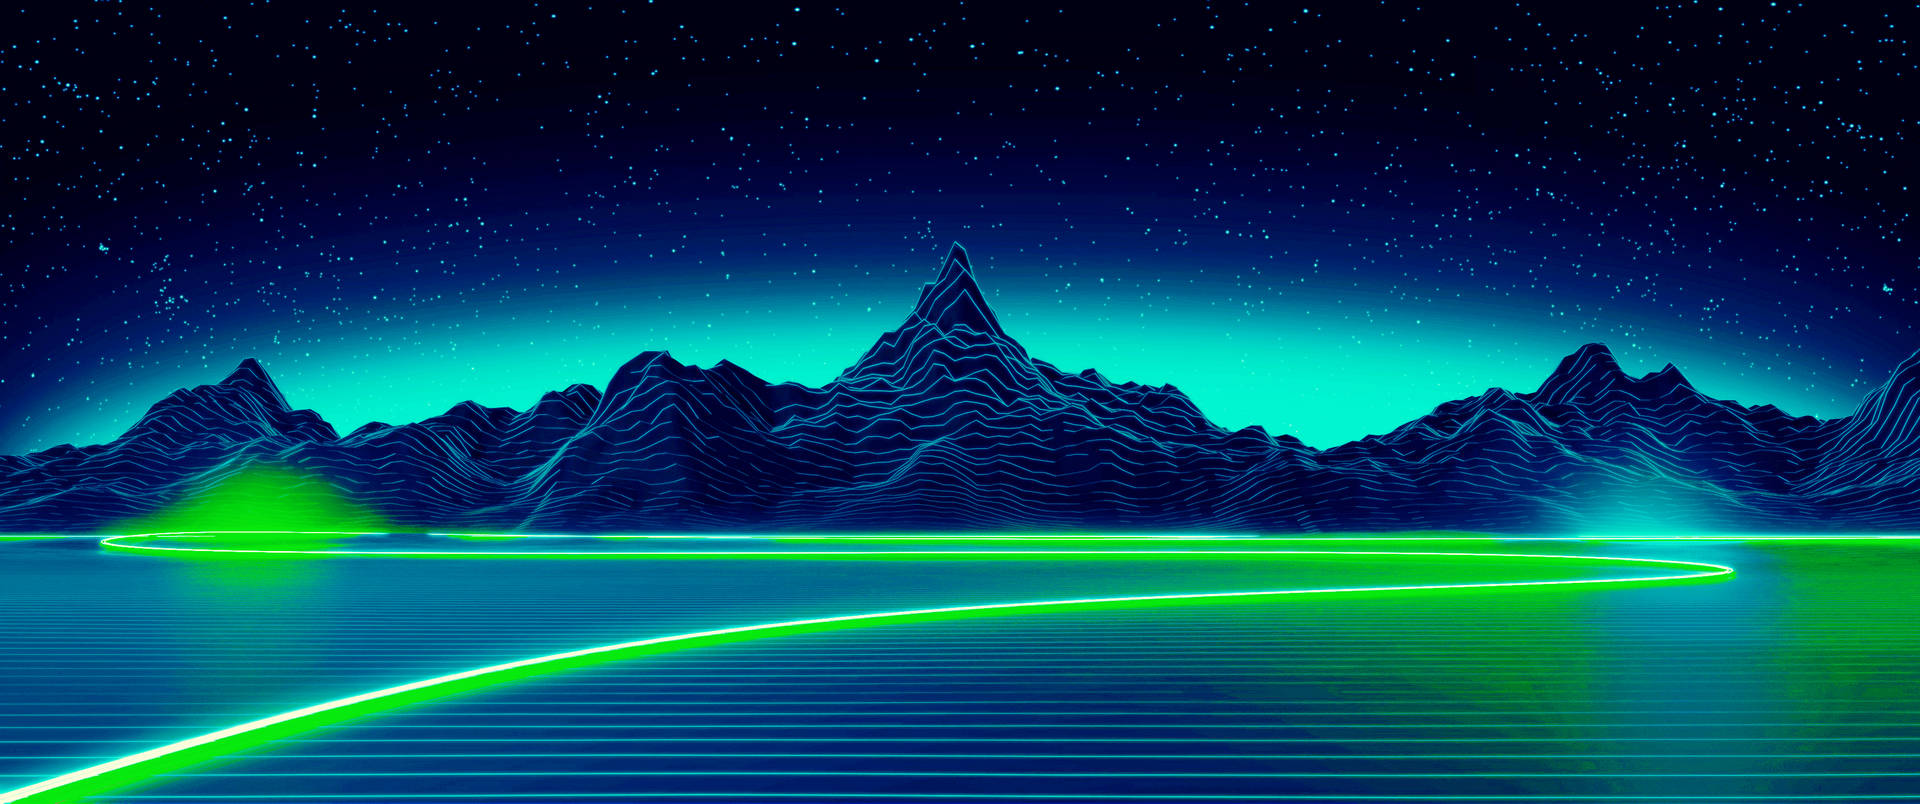 3440x1440 Minimalist Neon Green Field Background